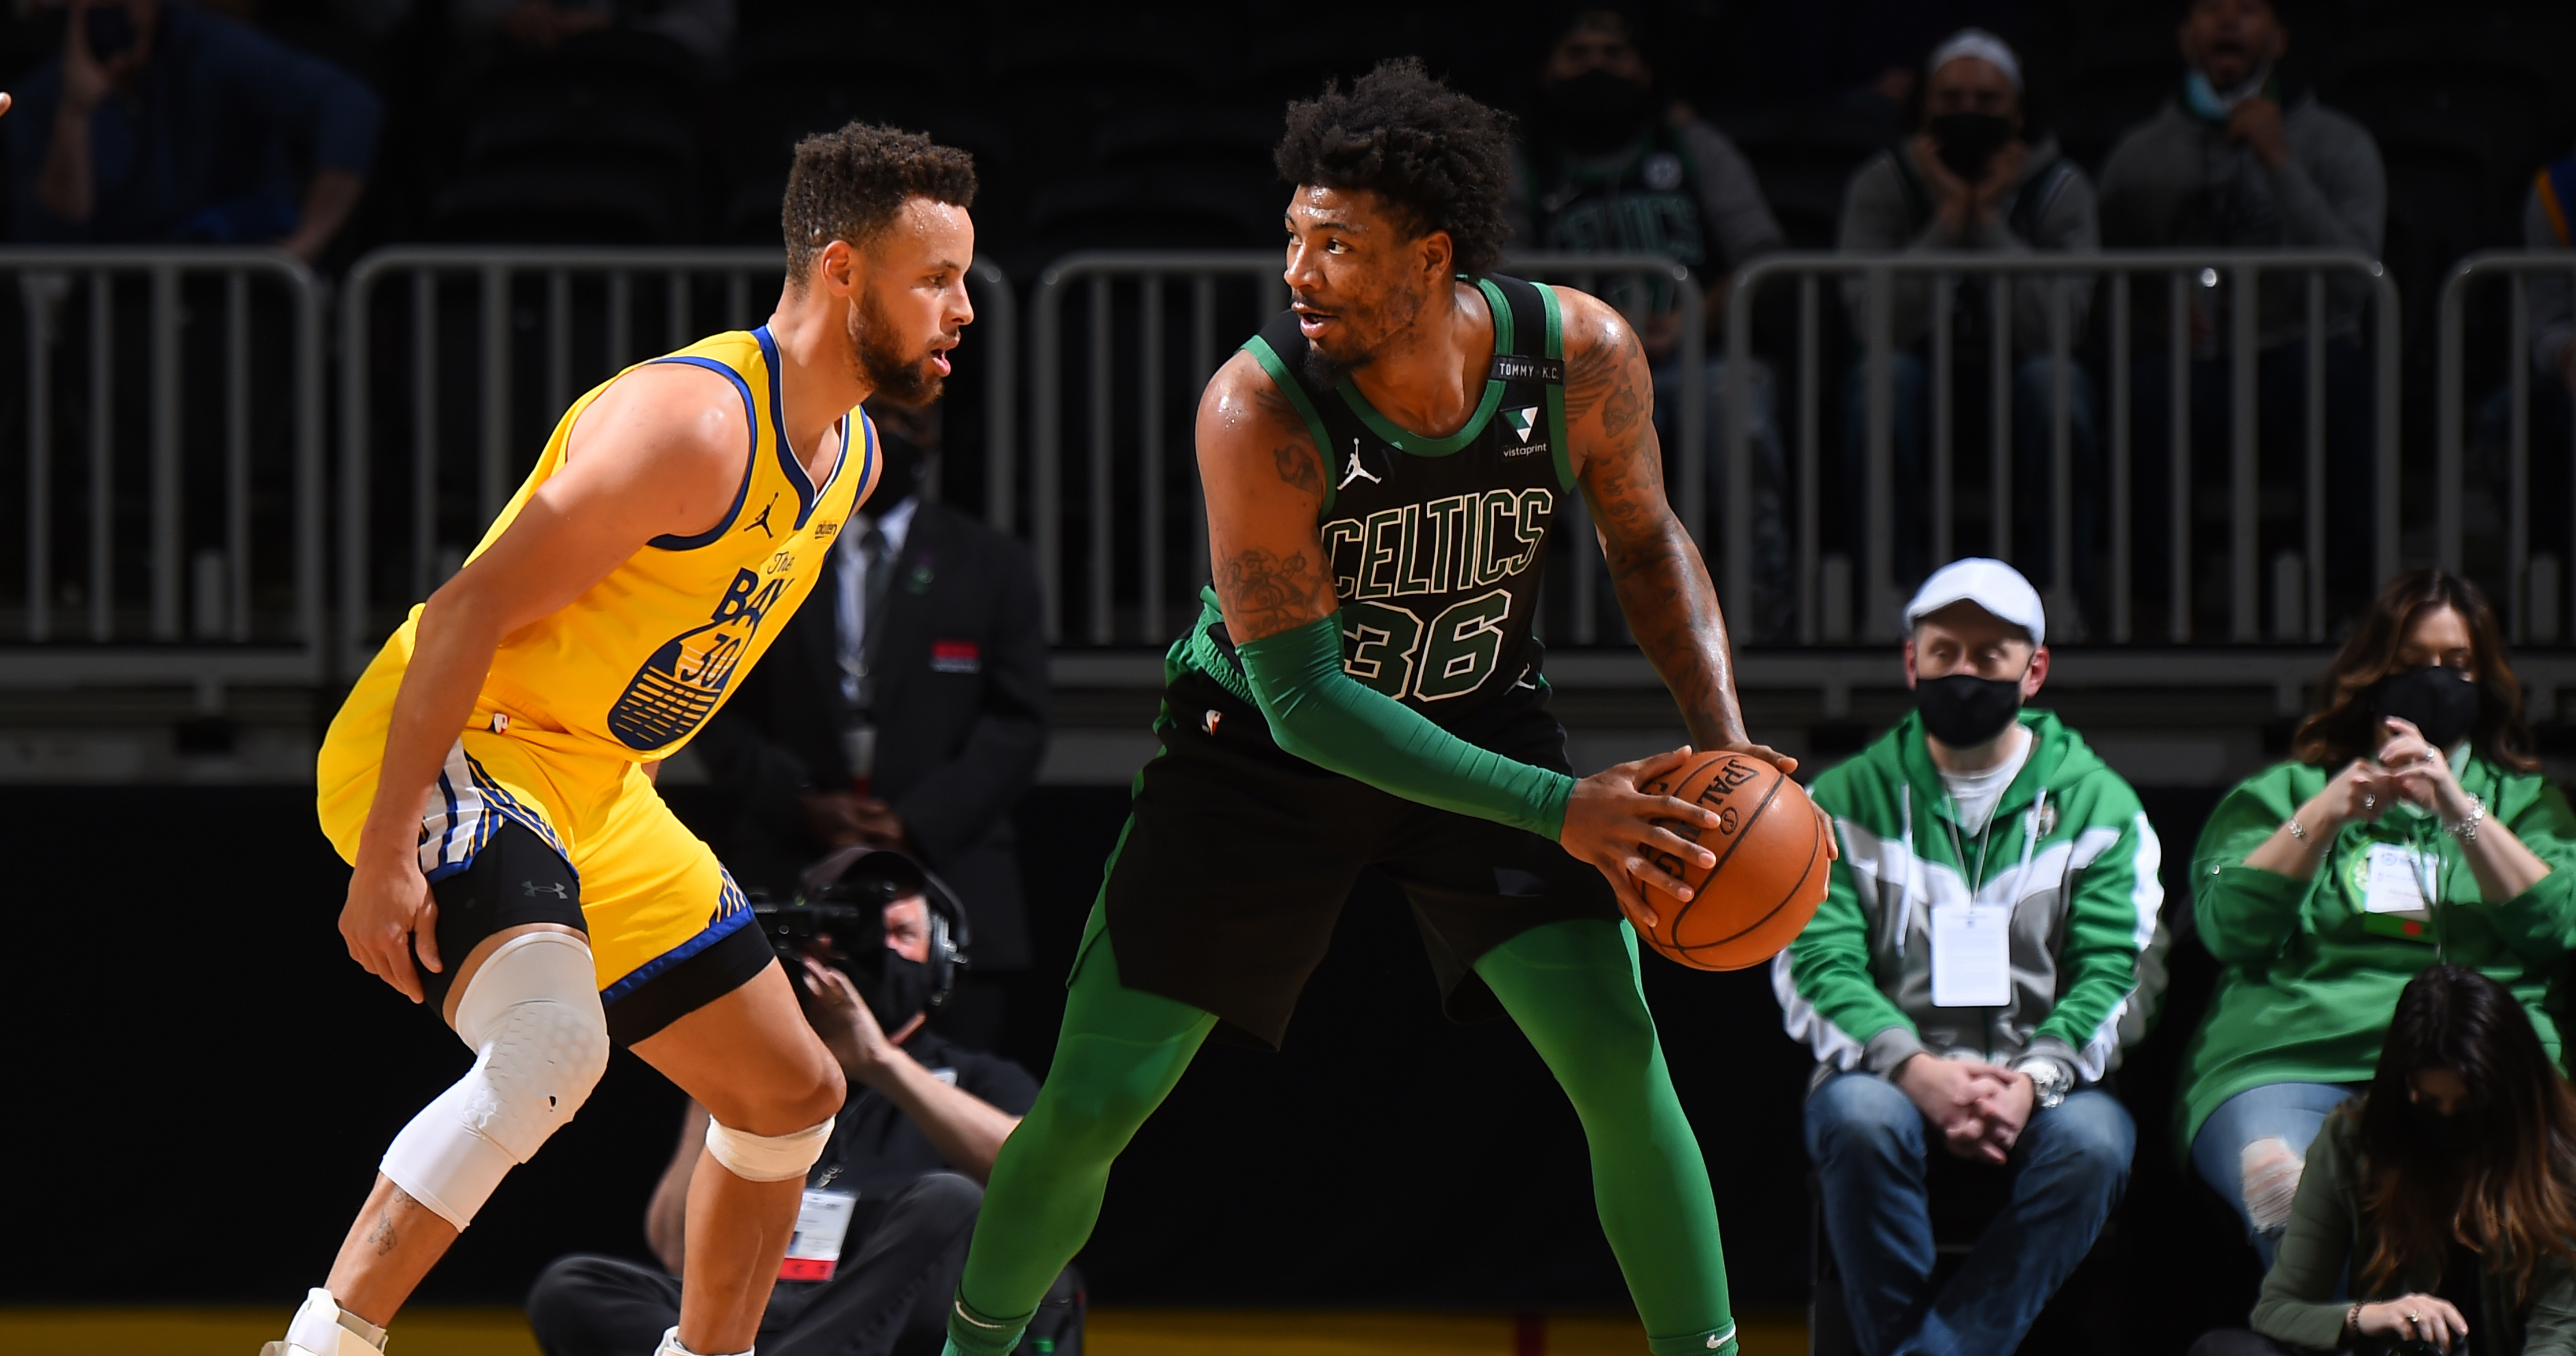 Celtics Unveil 2021-22 NBA 'City Edition' Uniform, Including